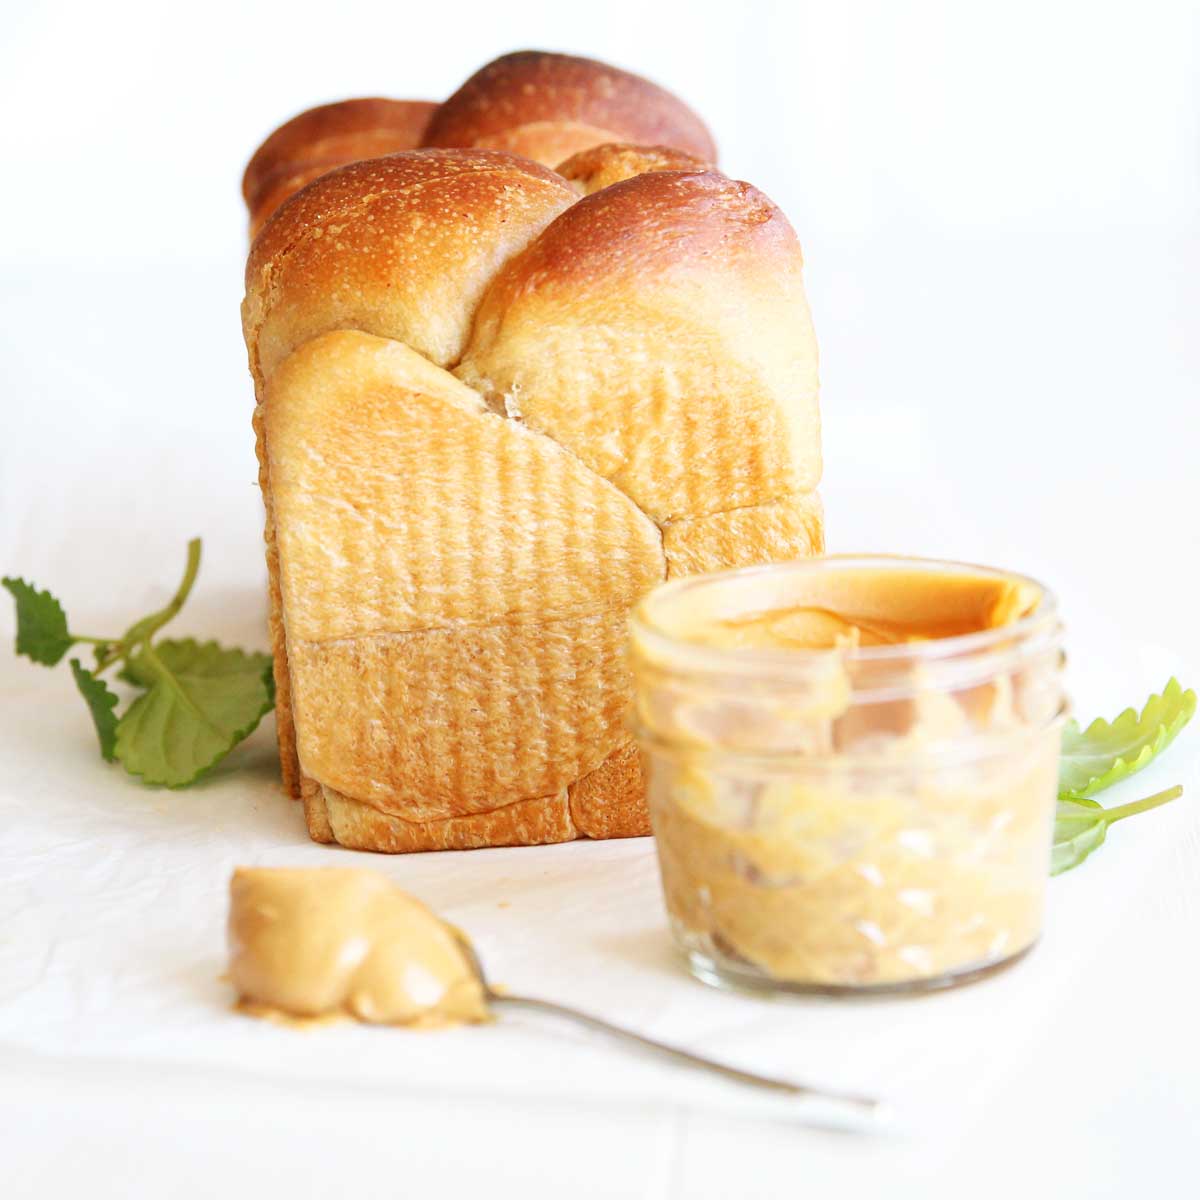 Peanut Butter Yeast Bread (A Healthier Vegan "Brioche" Recipe) - Roasted Corn Naan